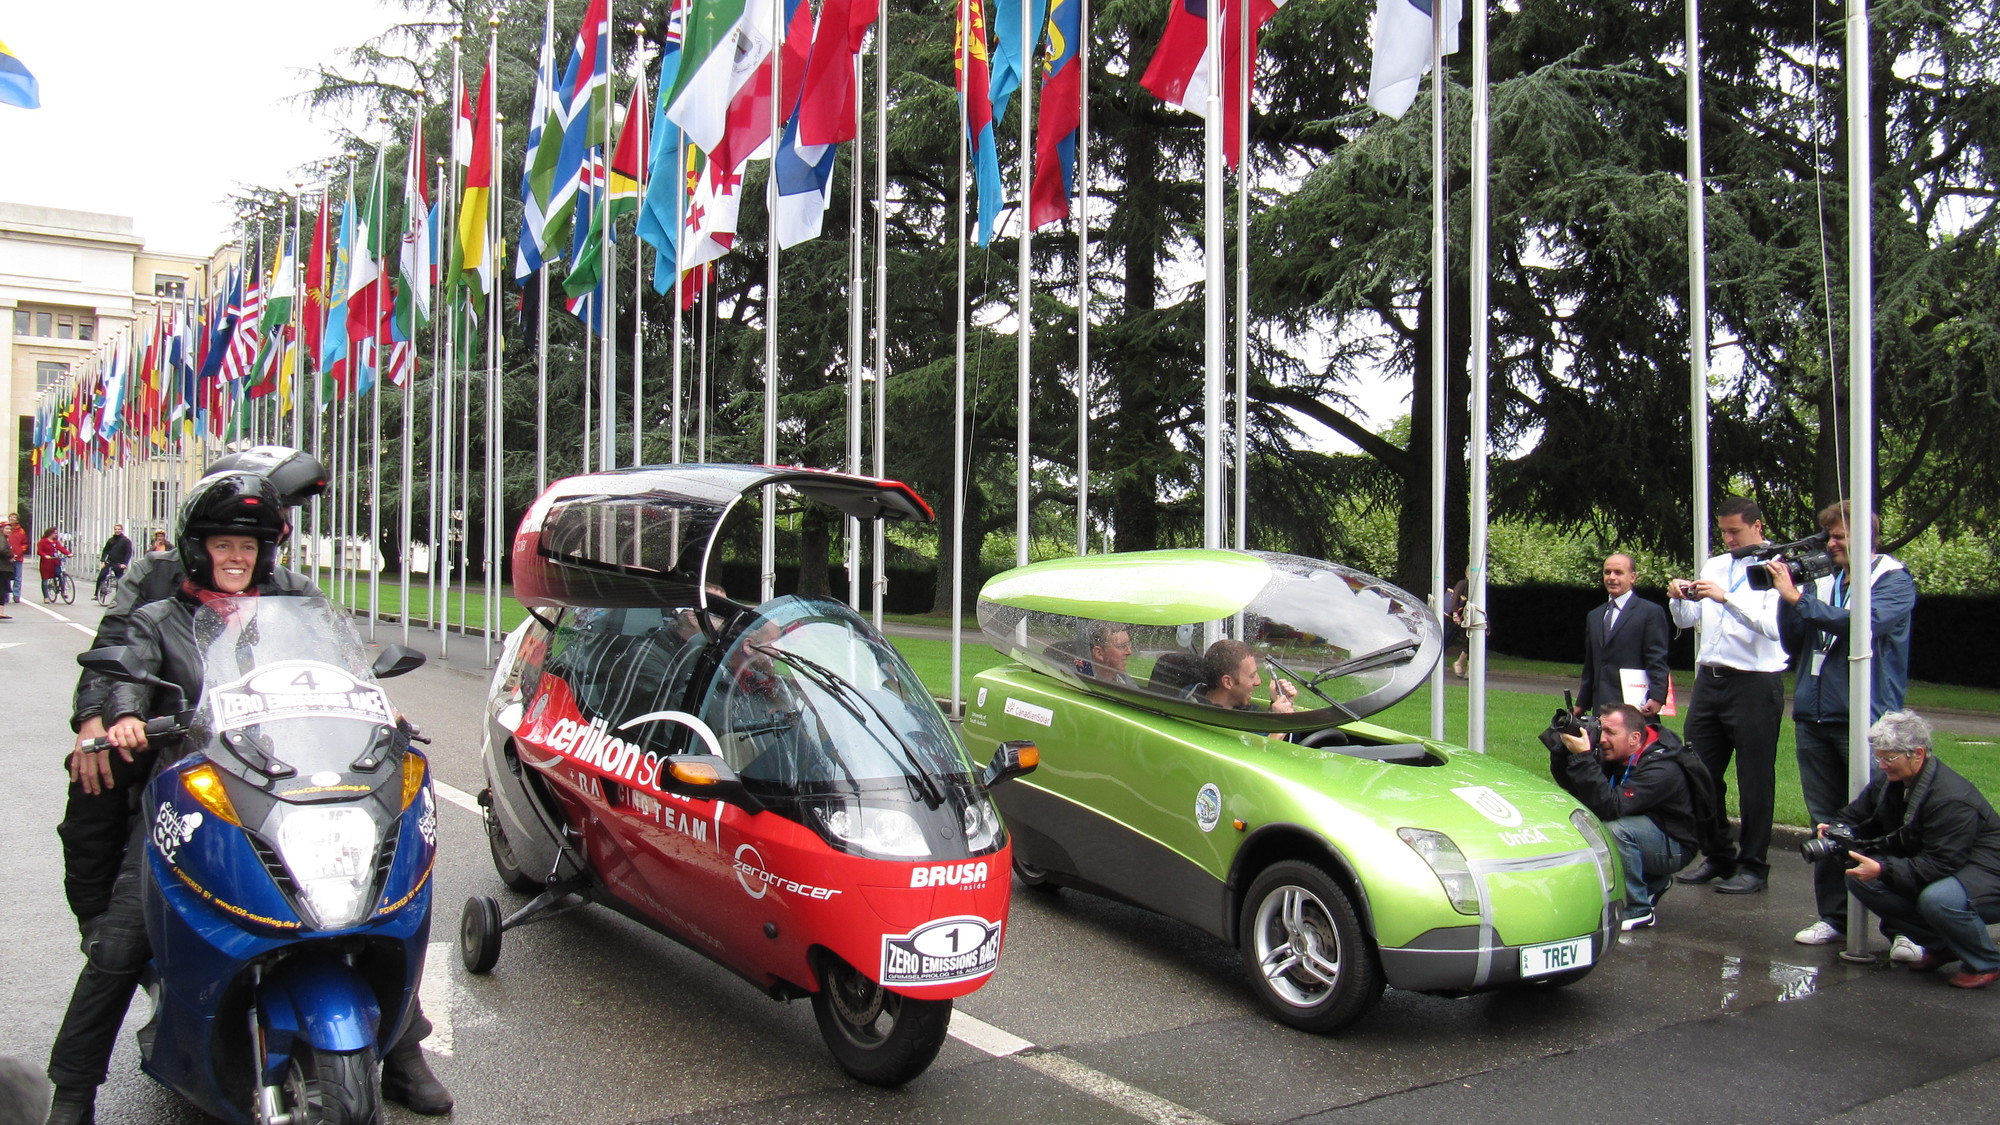 Competitors line up for the Zero Race in Geneva